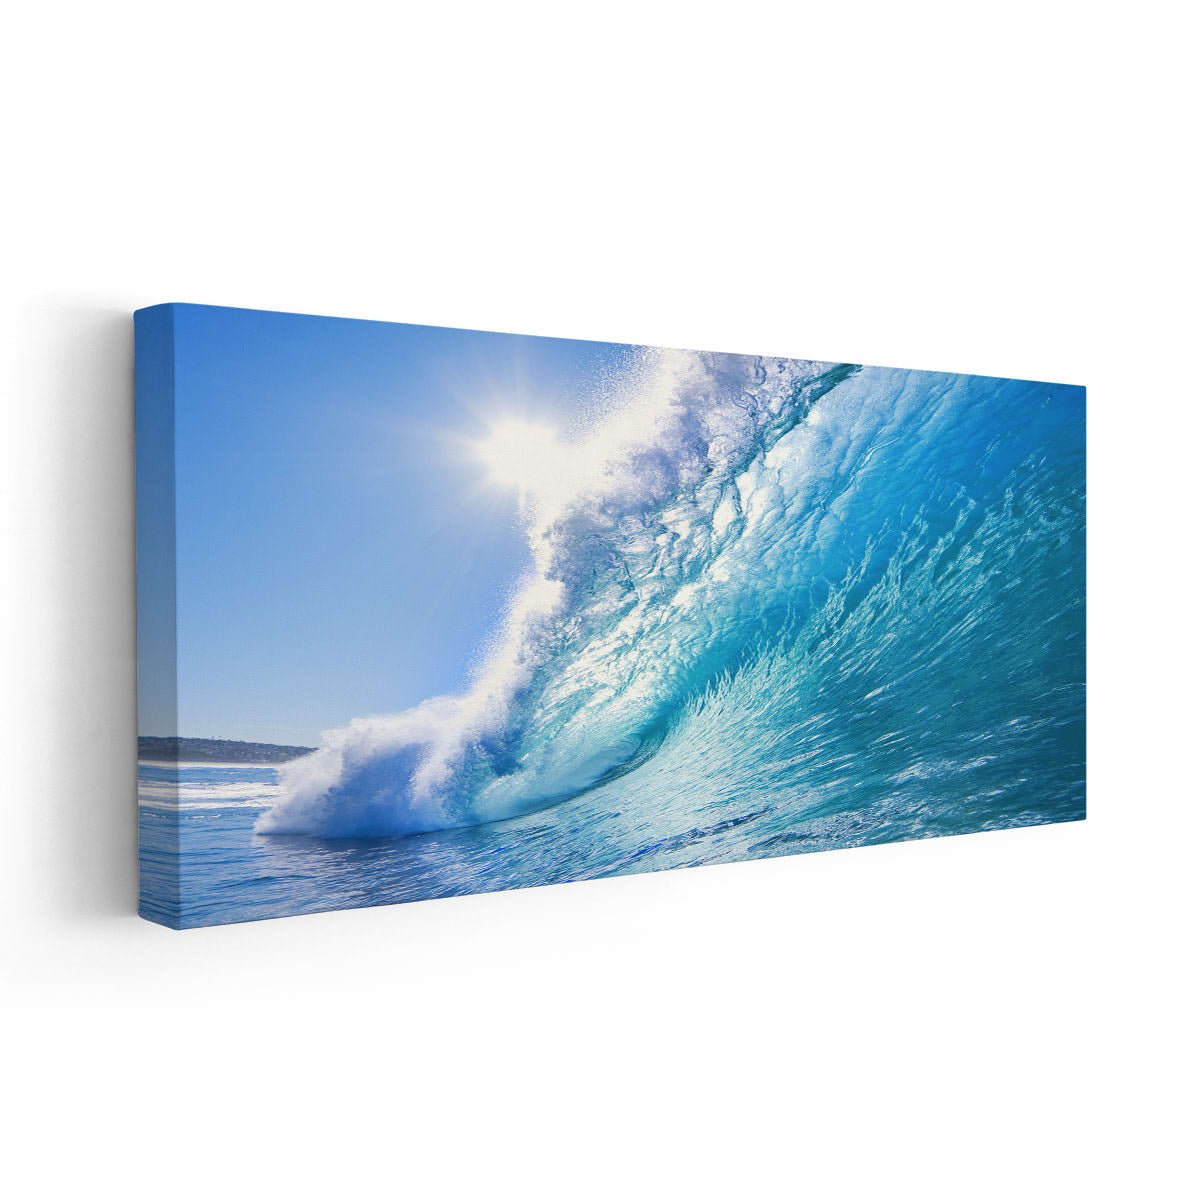 Big Blue Surfing Wave Canvas Wall Art